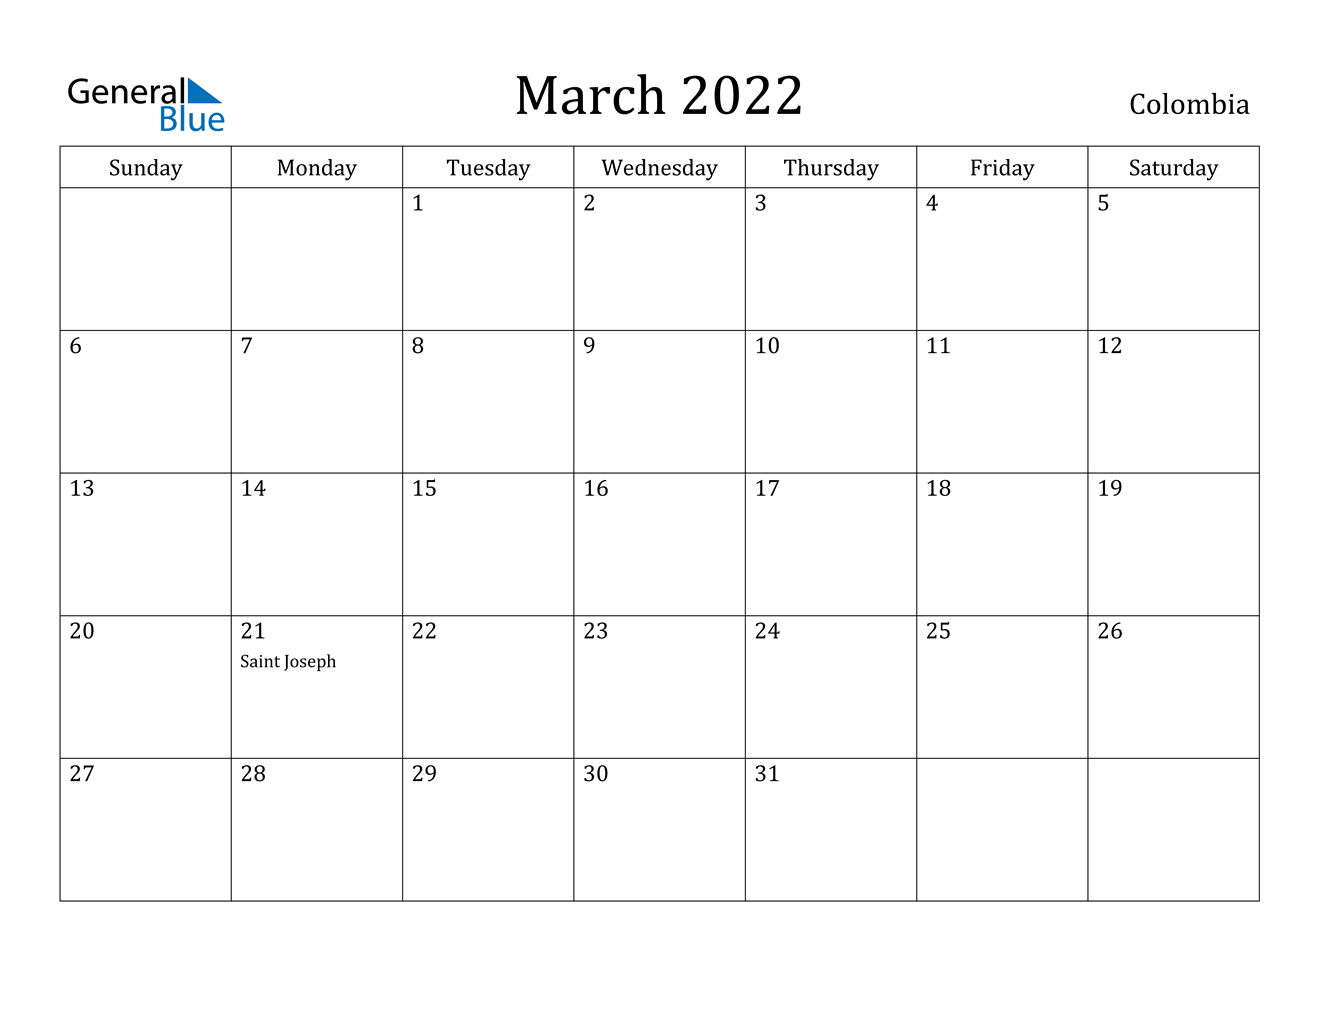 March 2022 Calendar - Colombia